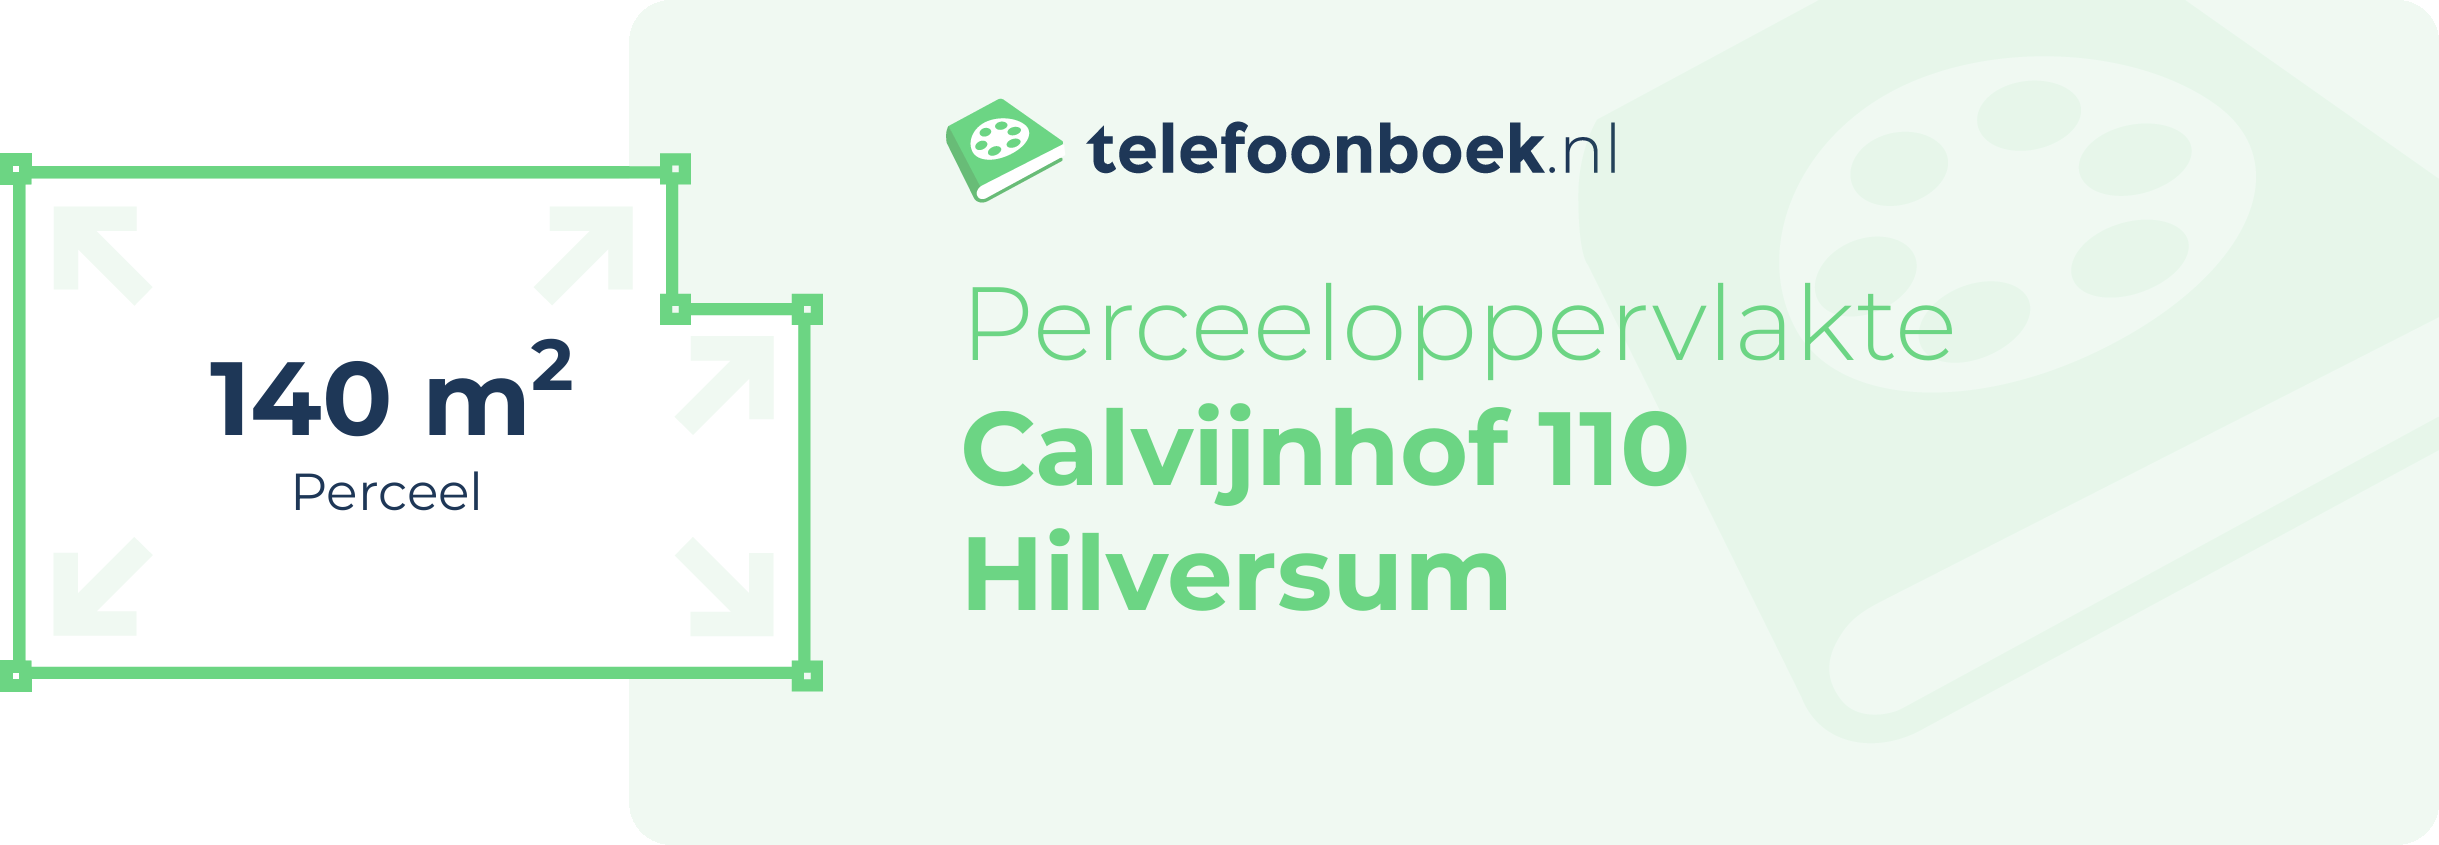 Perceeloppervlakte Calvijnhof 110 Hilversum